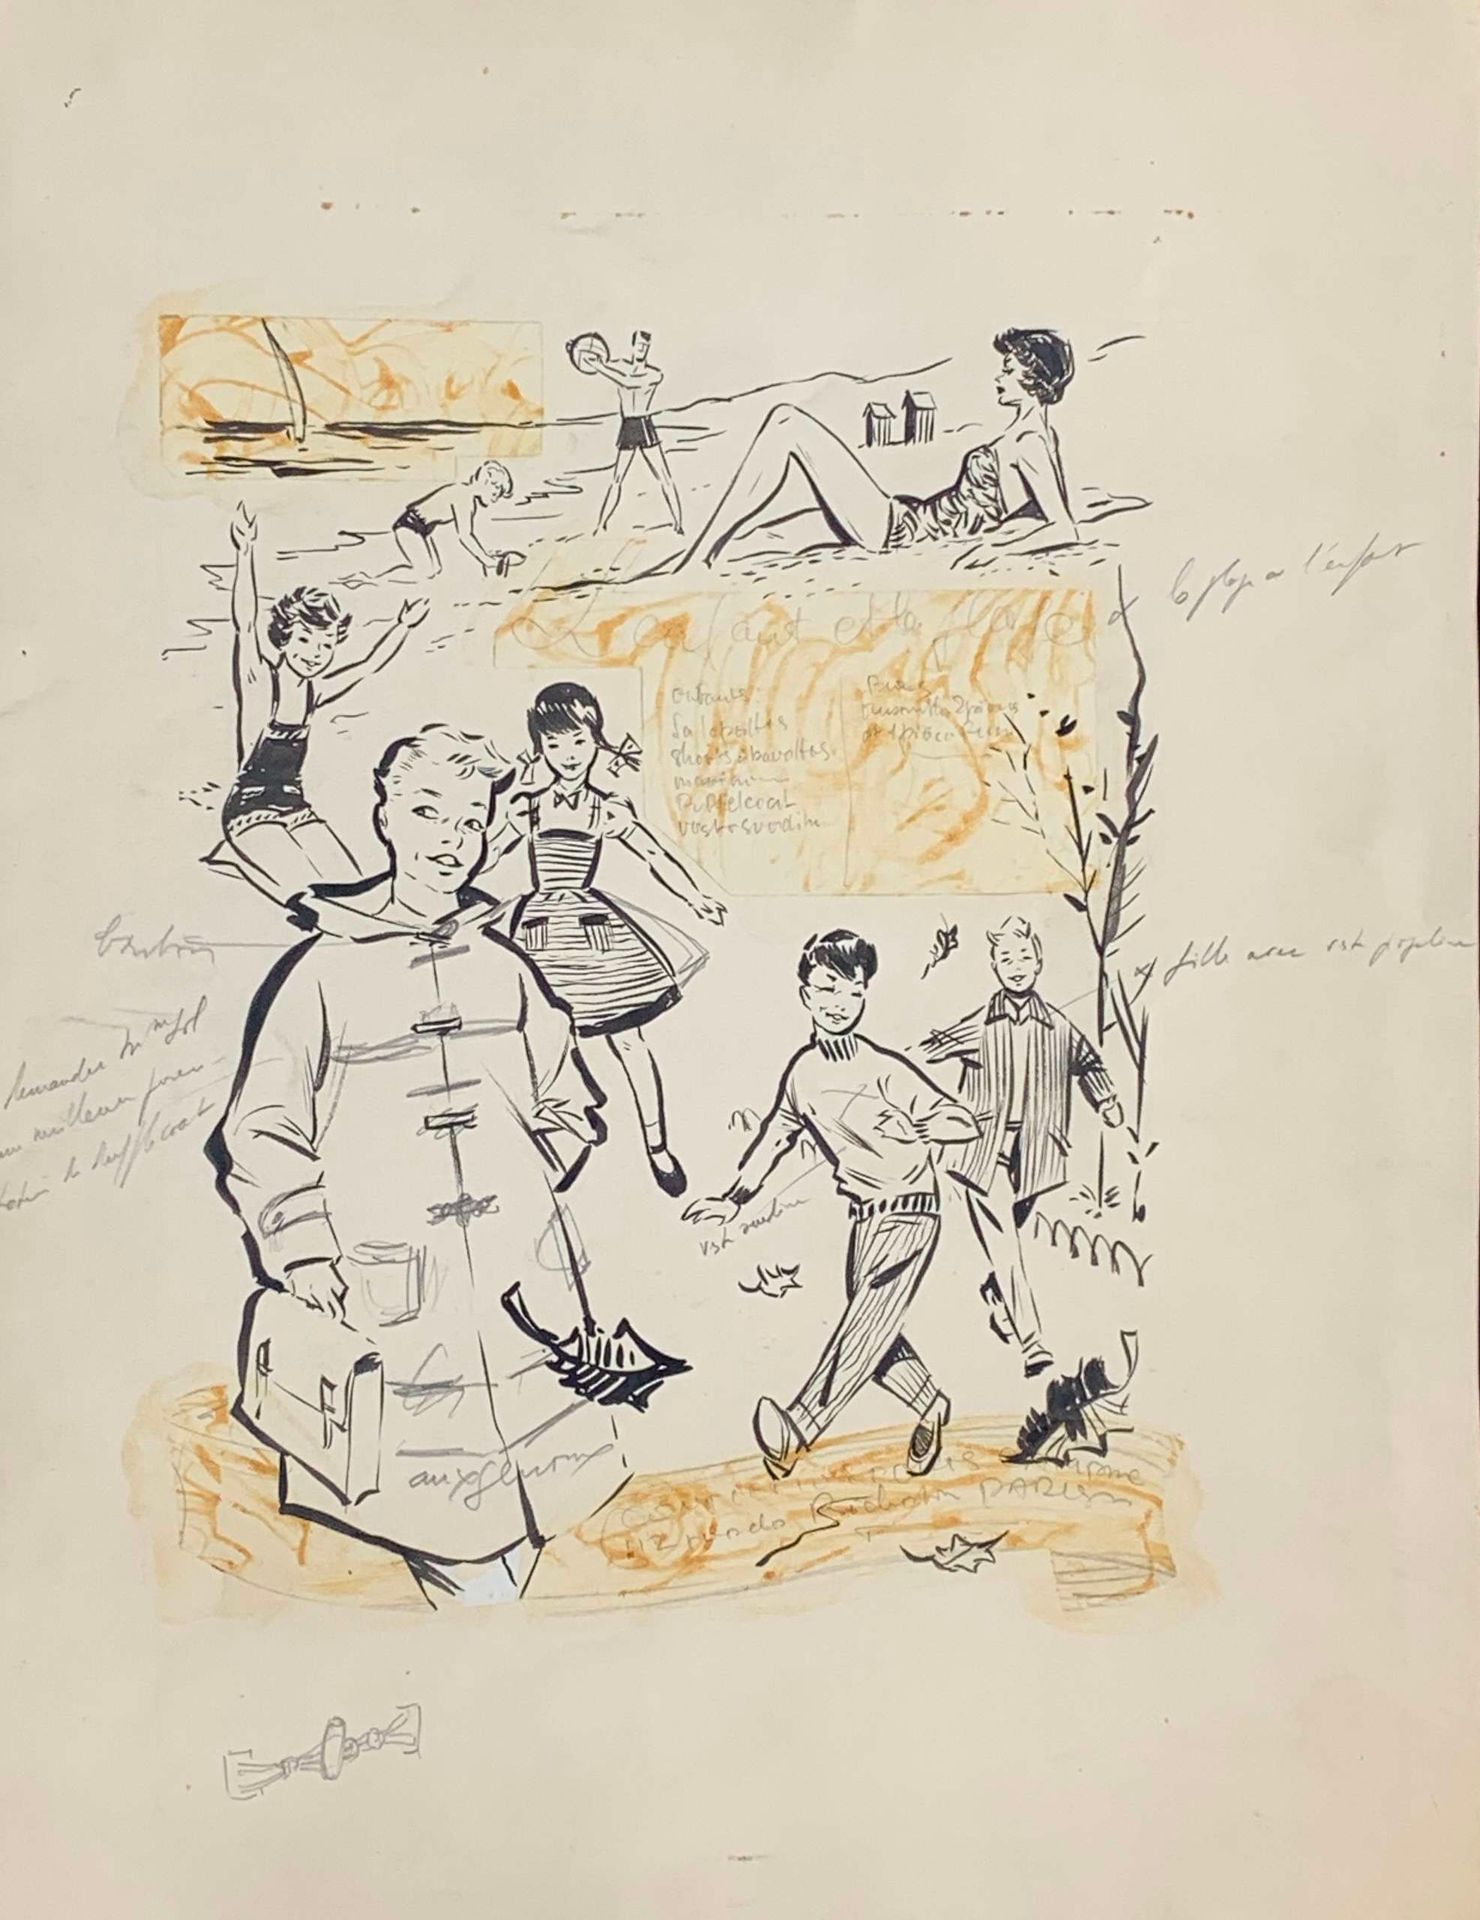 Null 雅克-戈达尔 (1920-2016)

L'enfant et la plage》一书的封面设计。

印度墨水，石墨和水彩画的亮点。大量的手写注释。背&hellip;